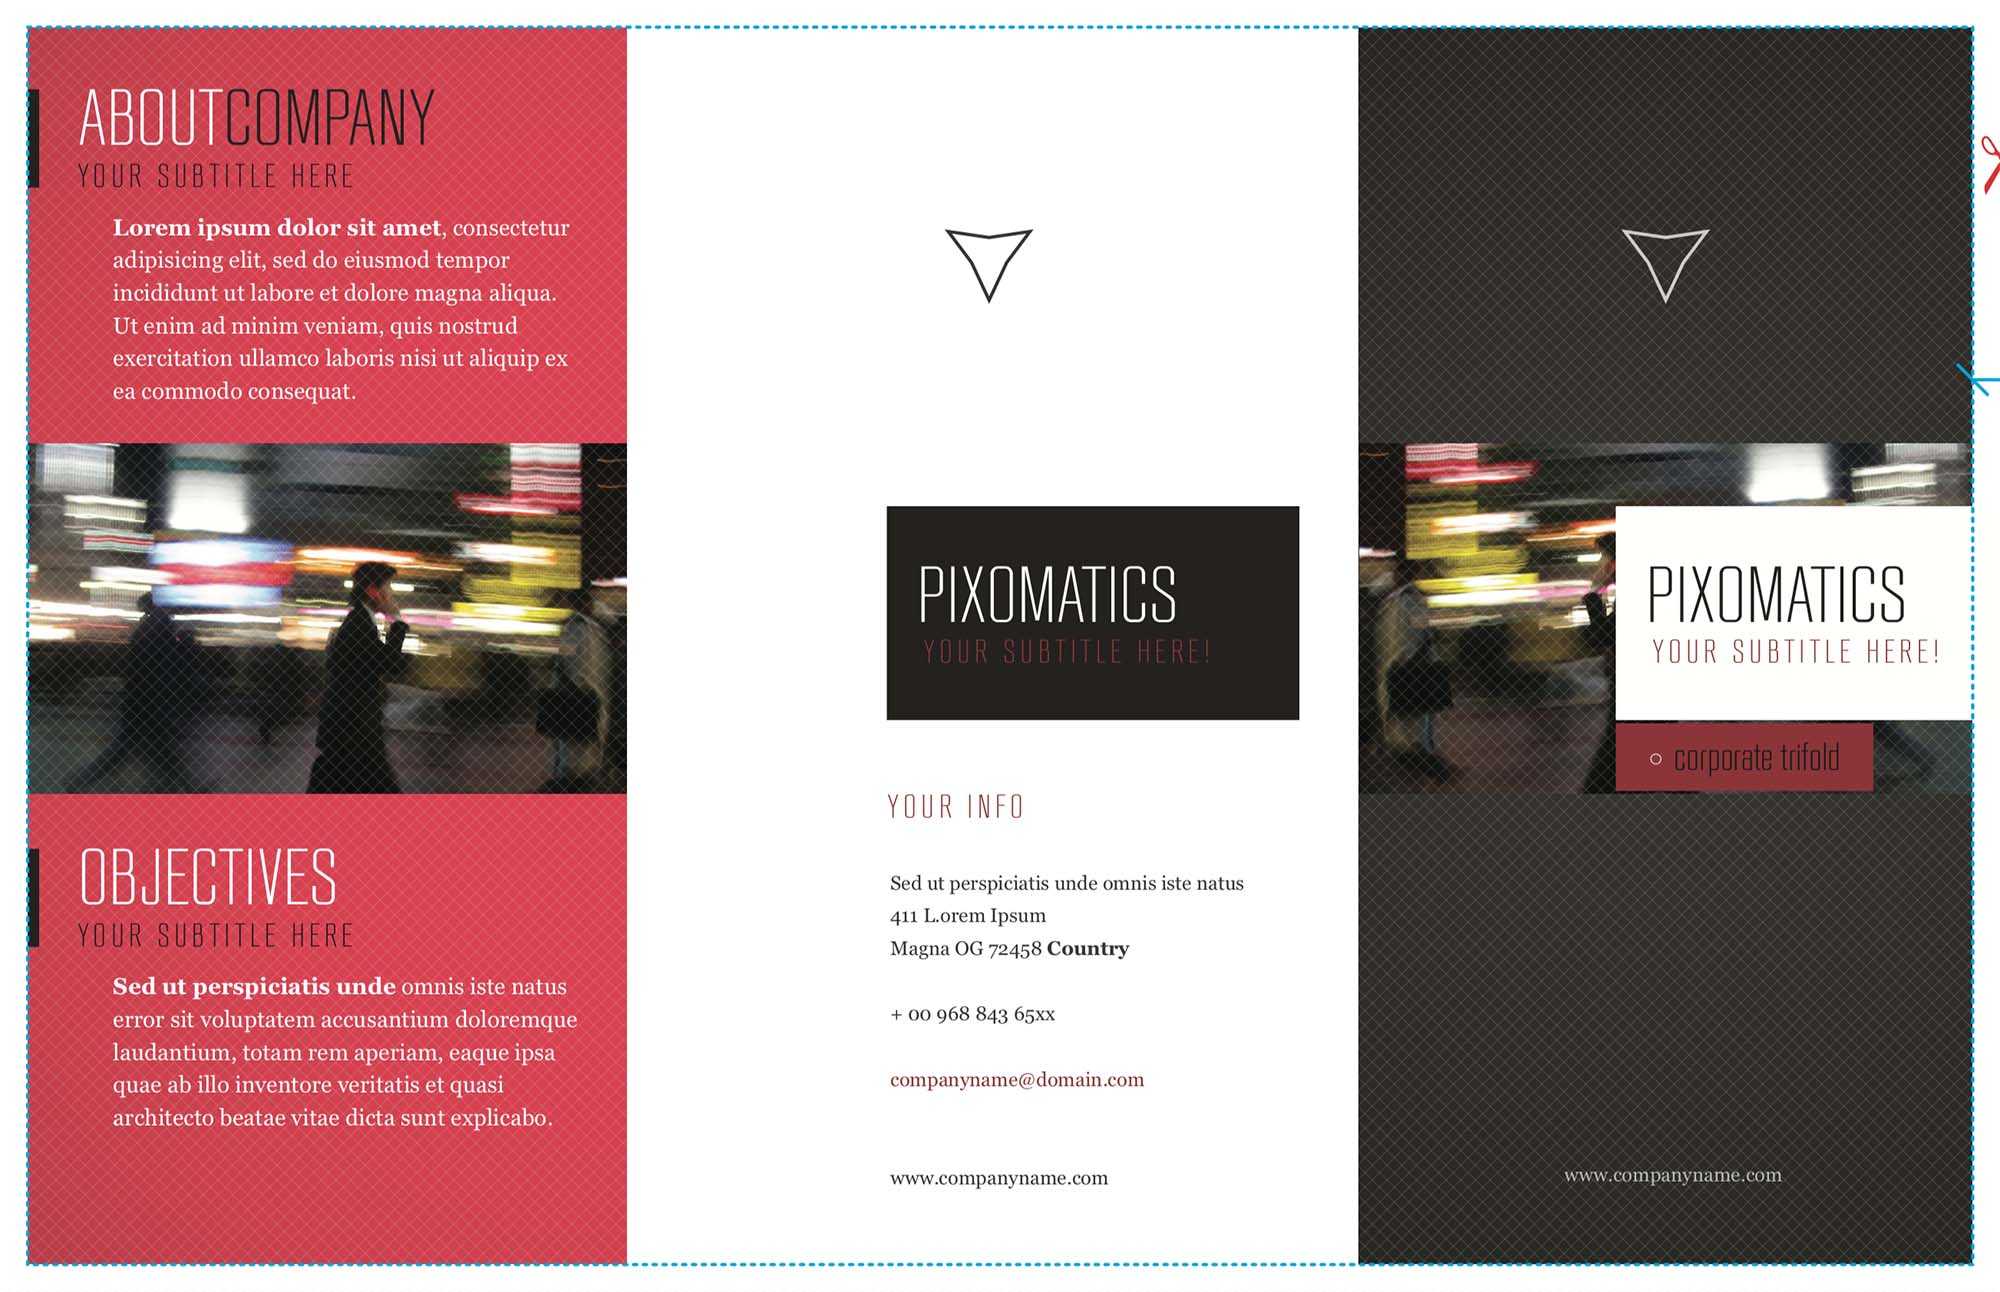 Free Corporate Tri Fold Brochure Template (Ai) Intended For Tri Fold Brochure Template Illustrator Free